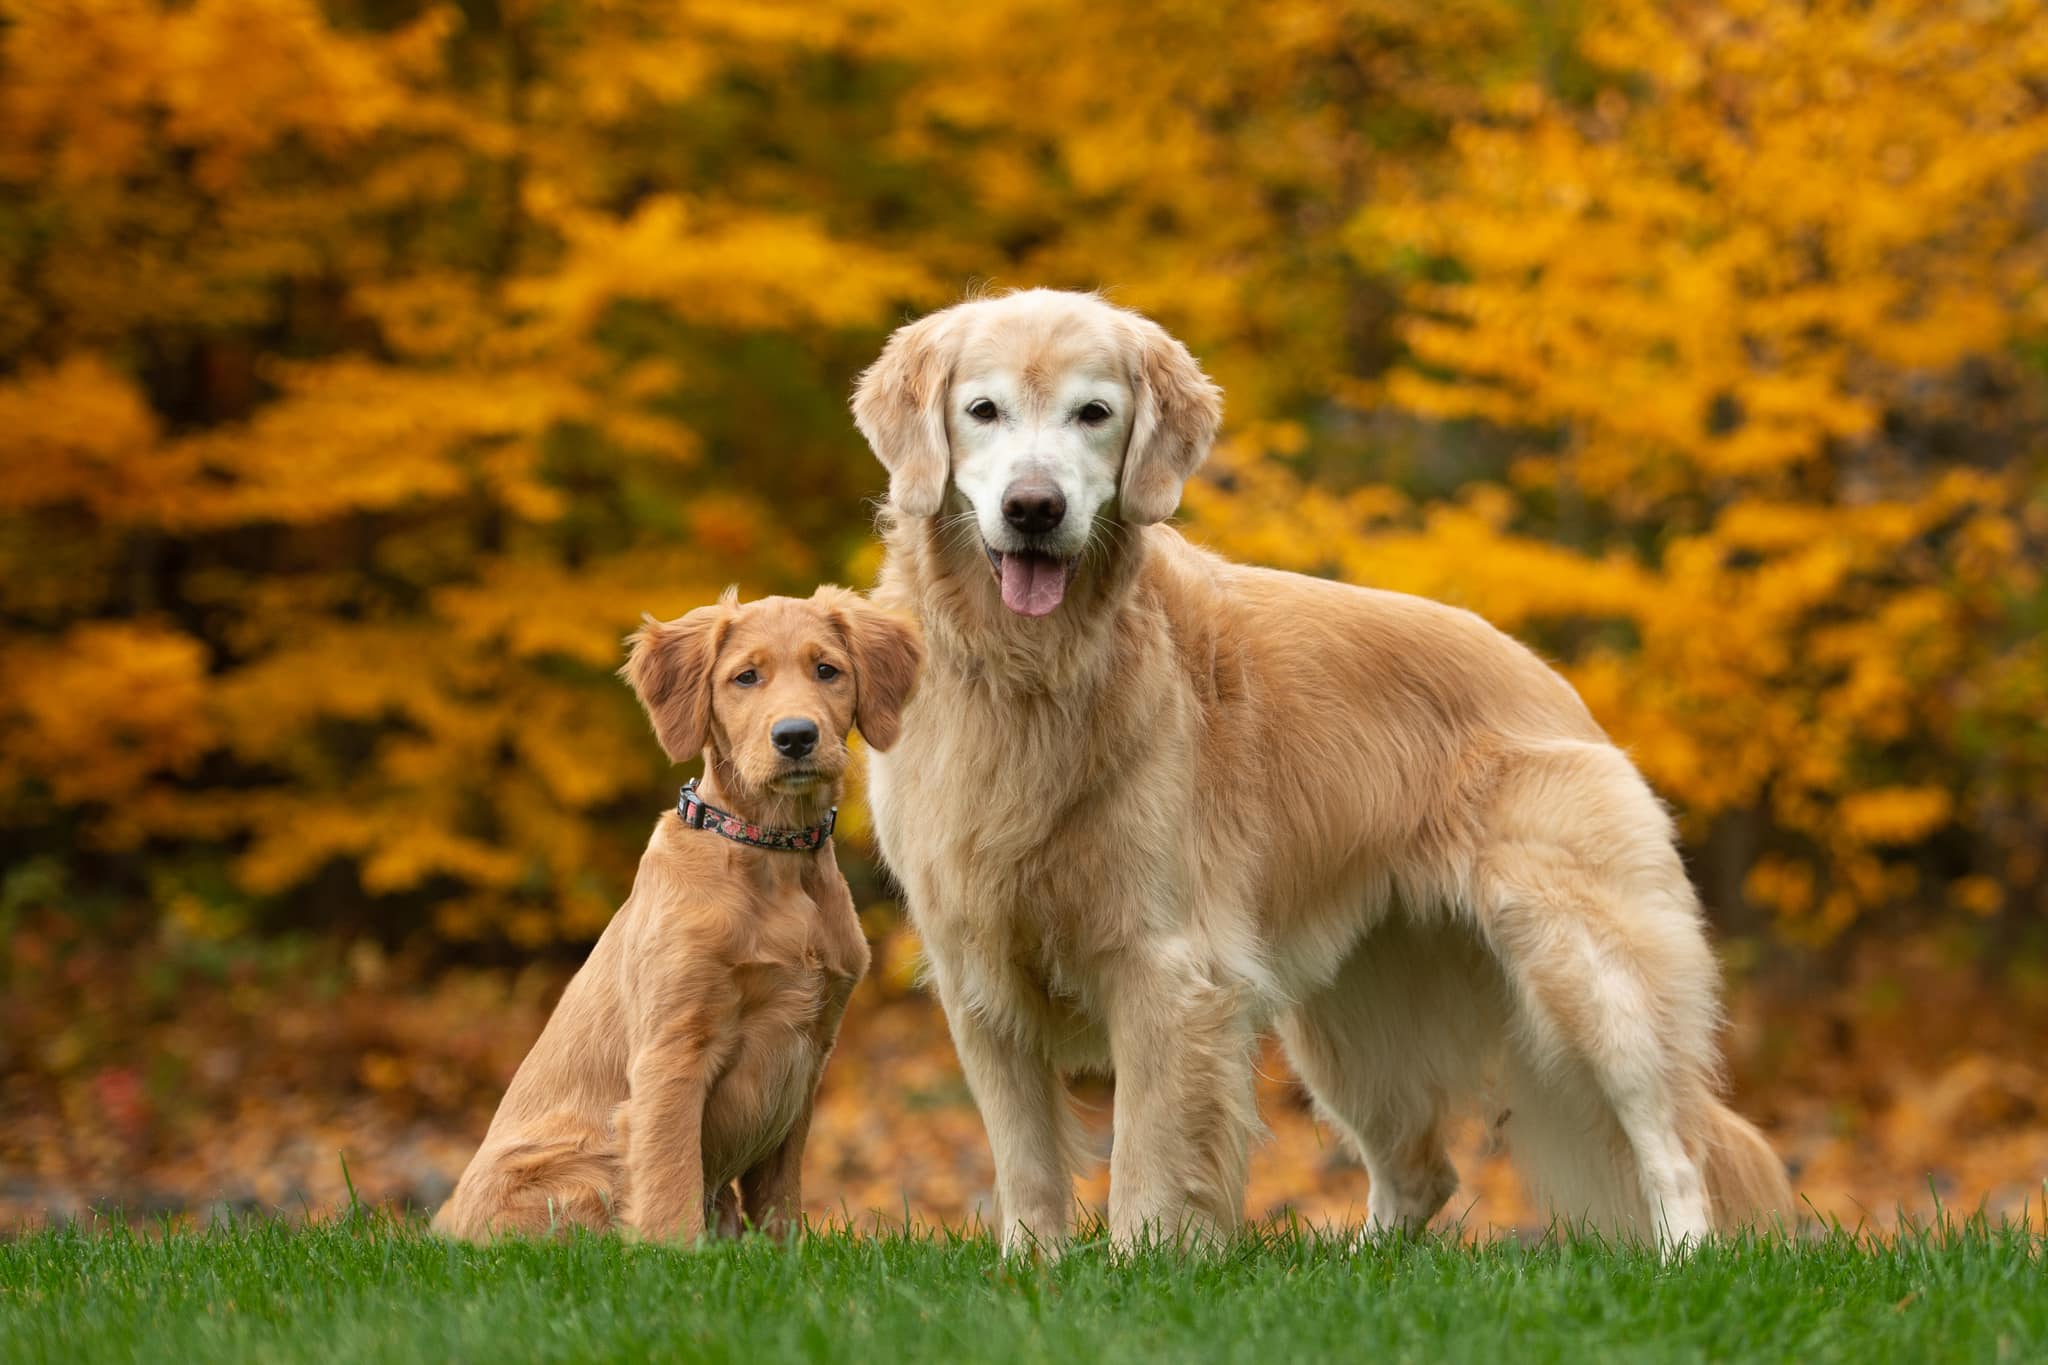 Senior golden retriever and golden retriever puppy during a fall pet photography session.
